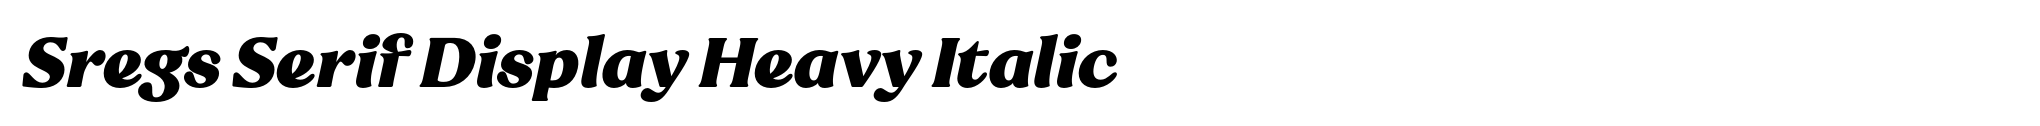 Sregs Serif Display Heavy Italic image